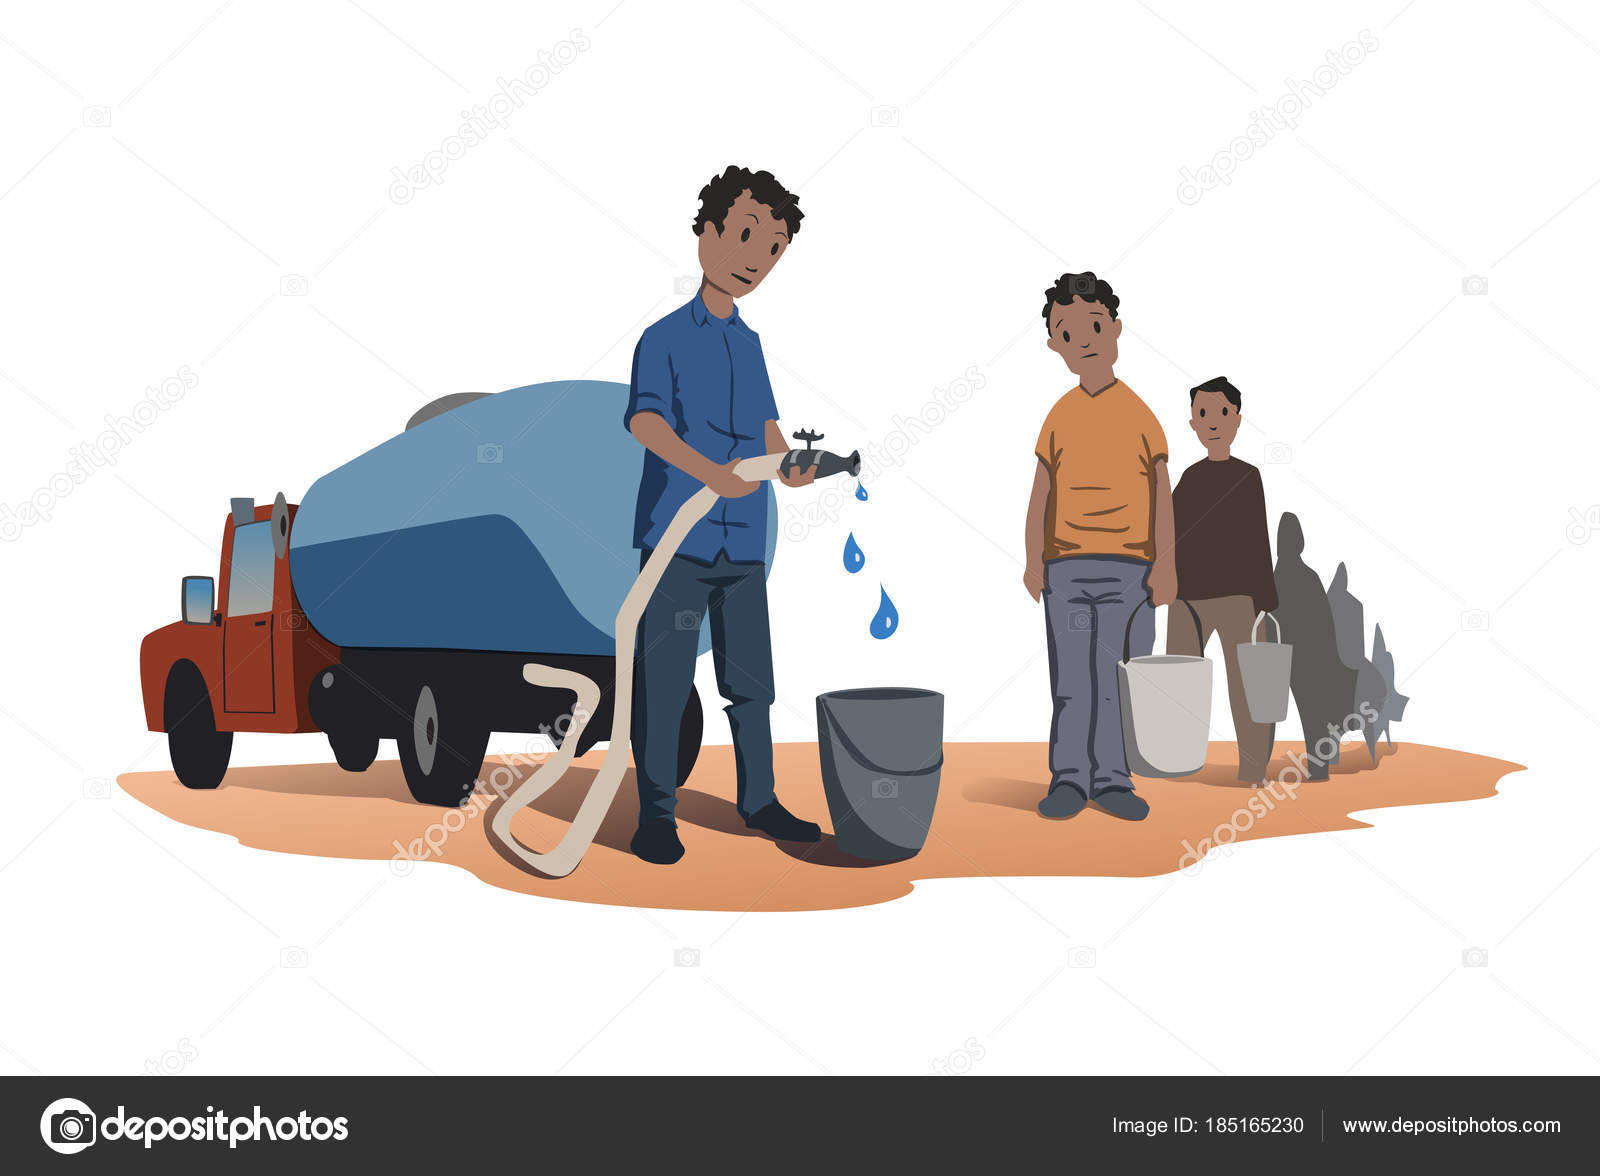 101 ilustraciones de stock de Escasez de agua | Depositphotos®